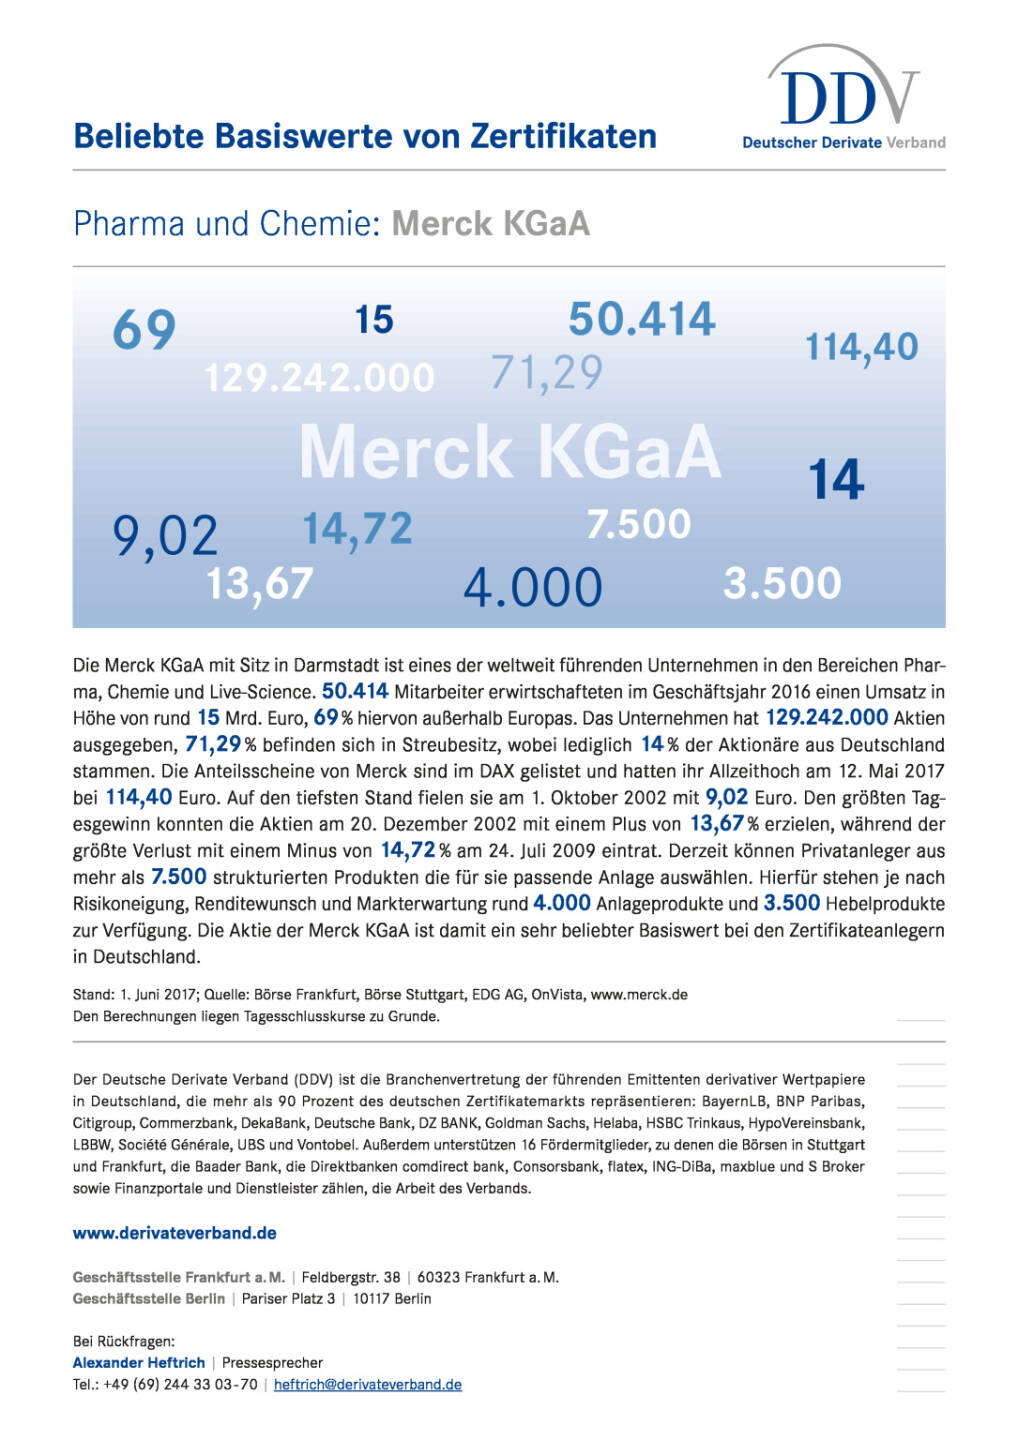 Beliebte Basiswerte von Zertifikaten: Merck KGaA, Seite 1/1, komplettes Dokument unter http://boerse-social.com/static/uploads/file_2279_beliebte_basiswerte_von_zertifikaten_merck_kgaa.pdf